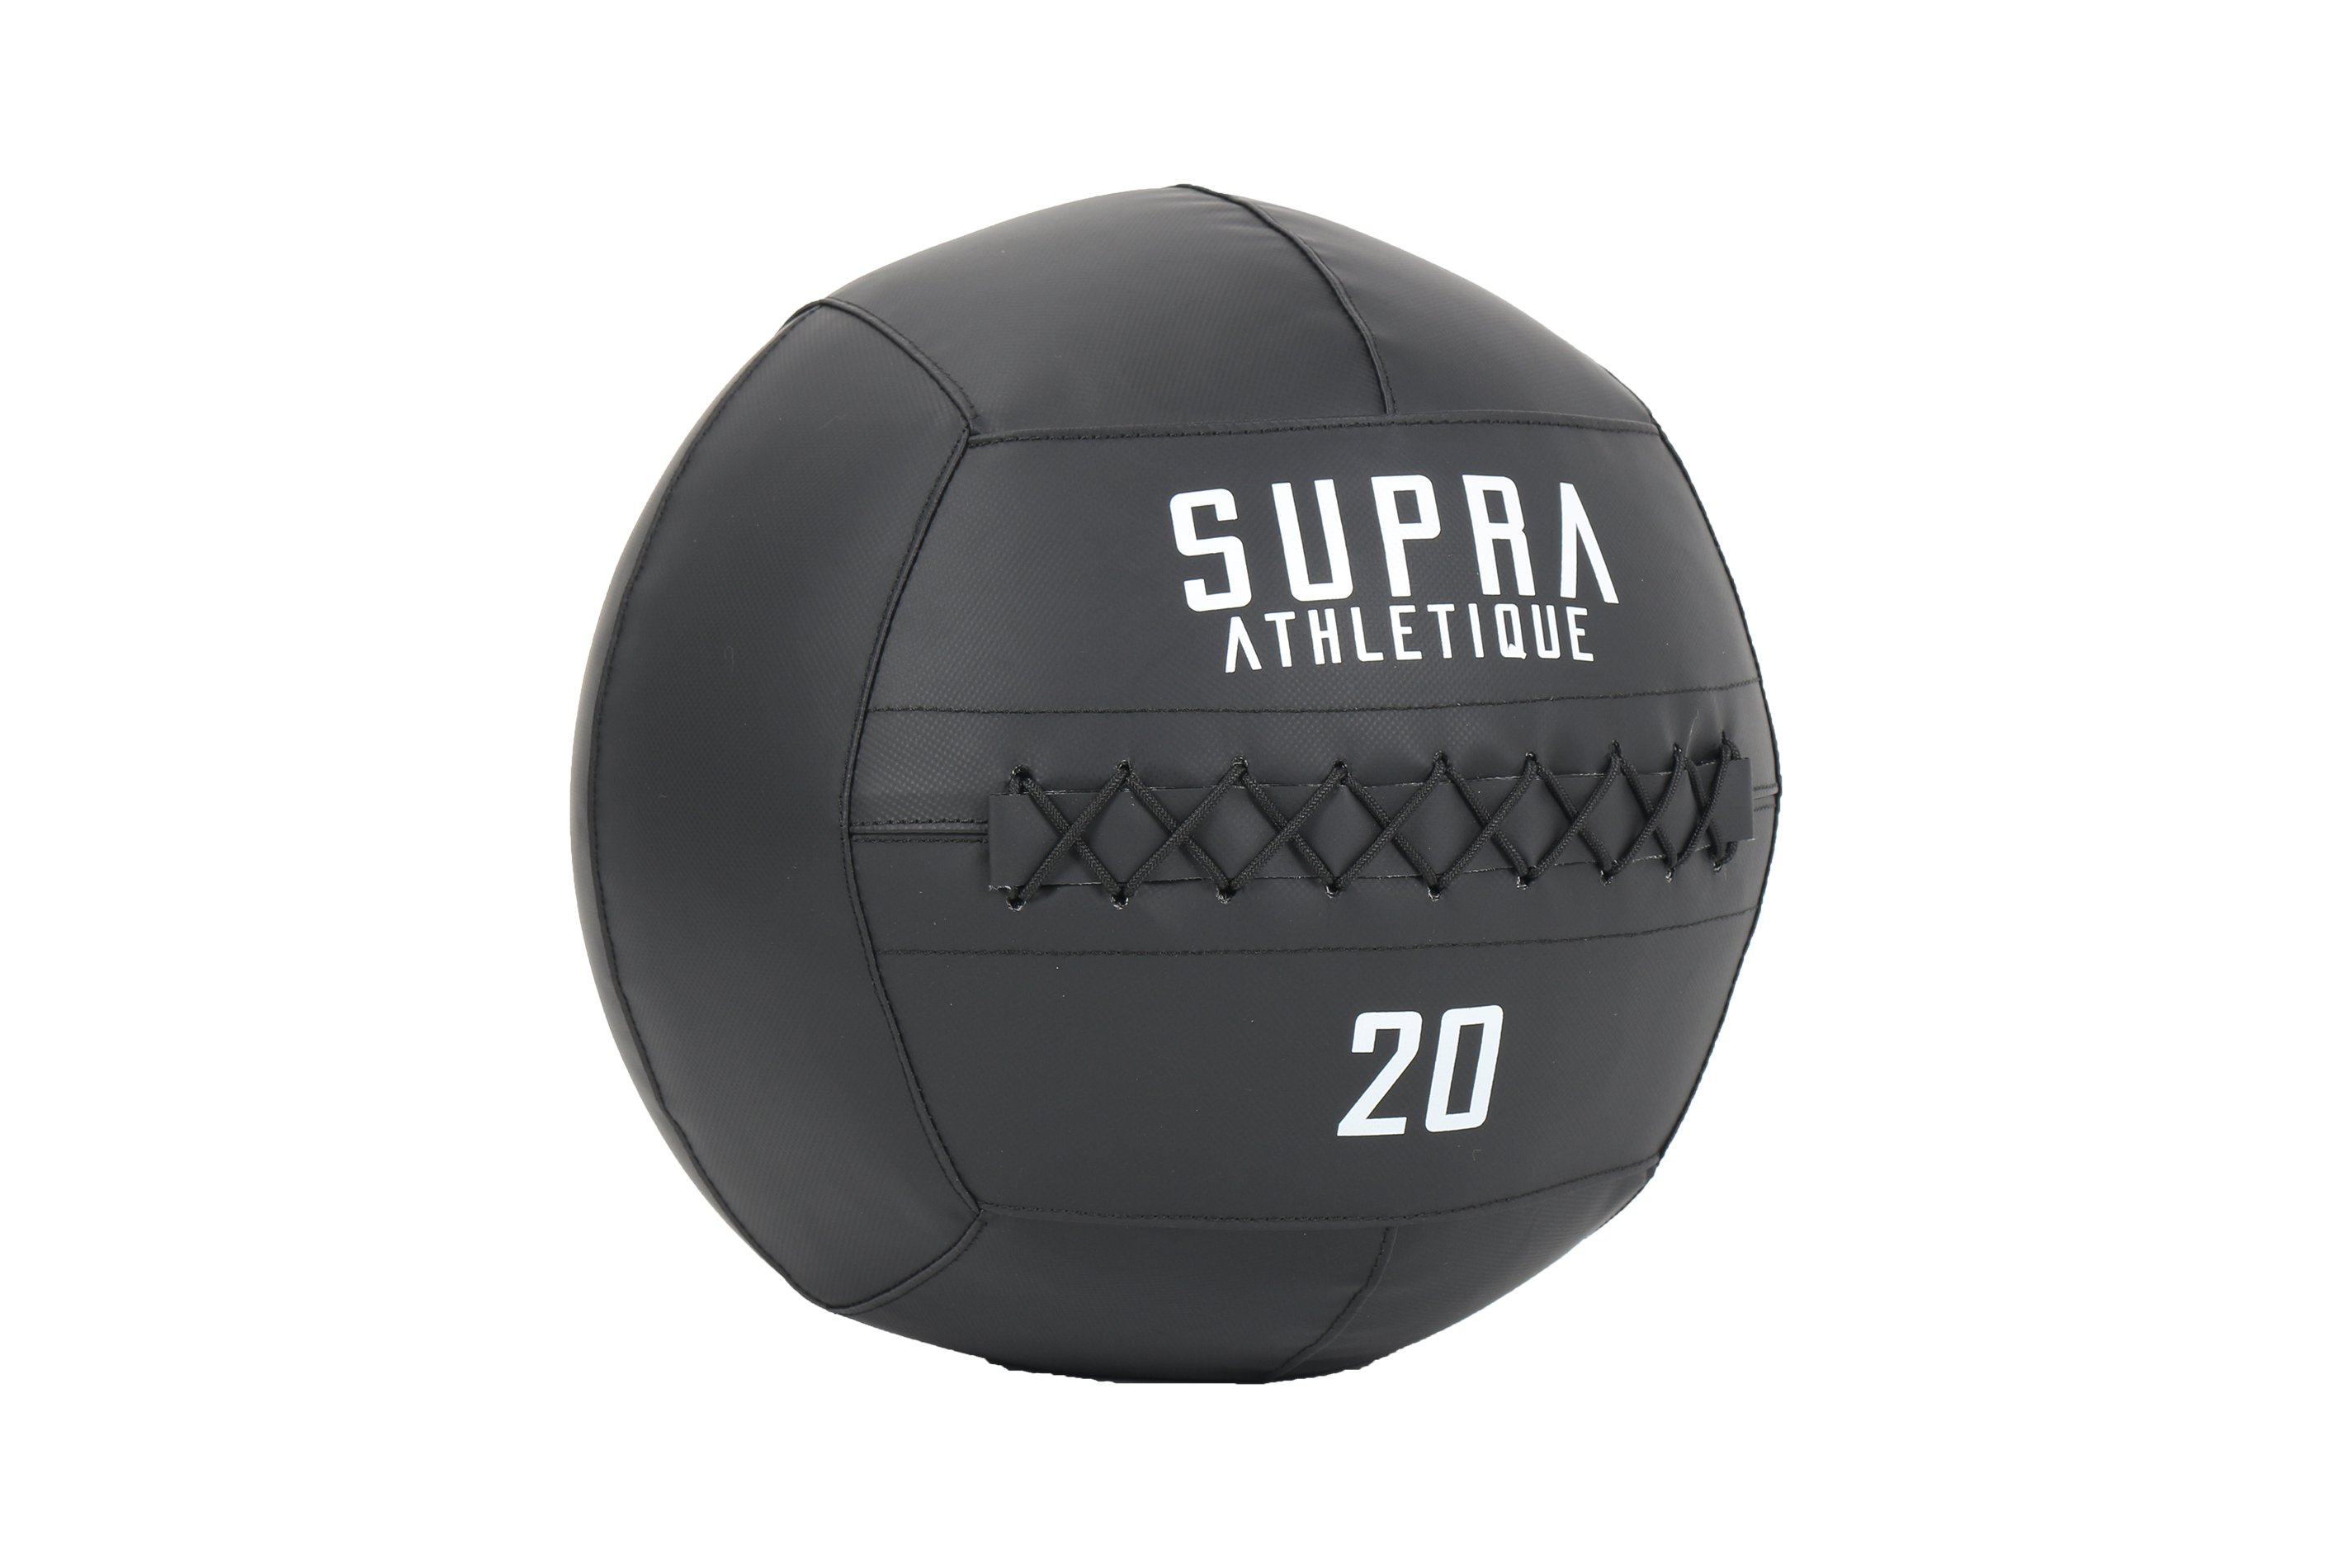 Supra Medicine Ball V2